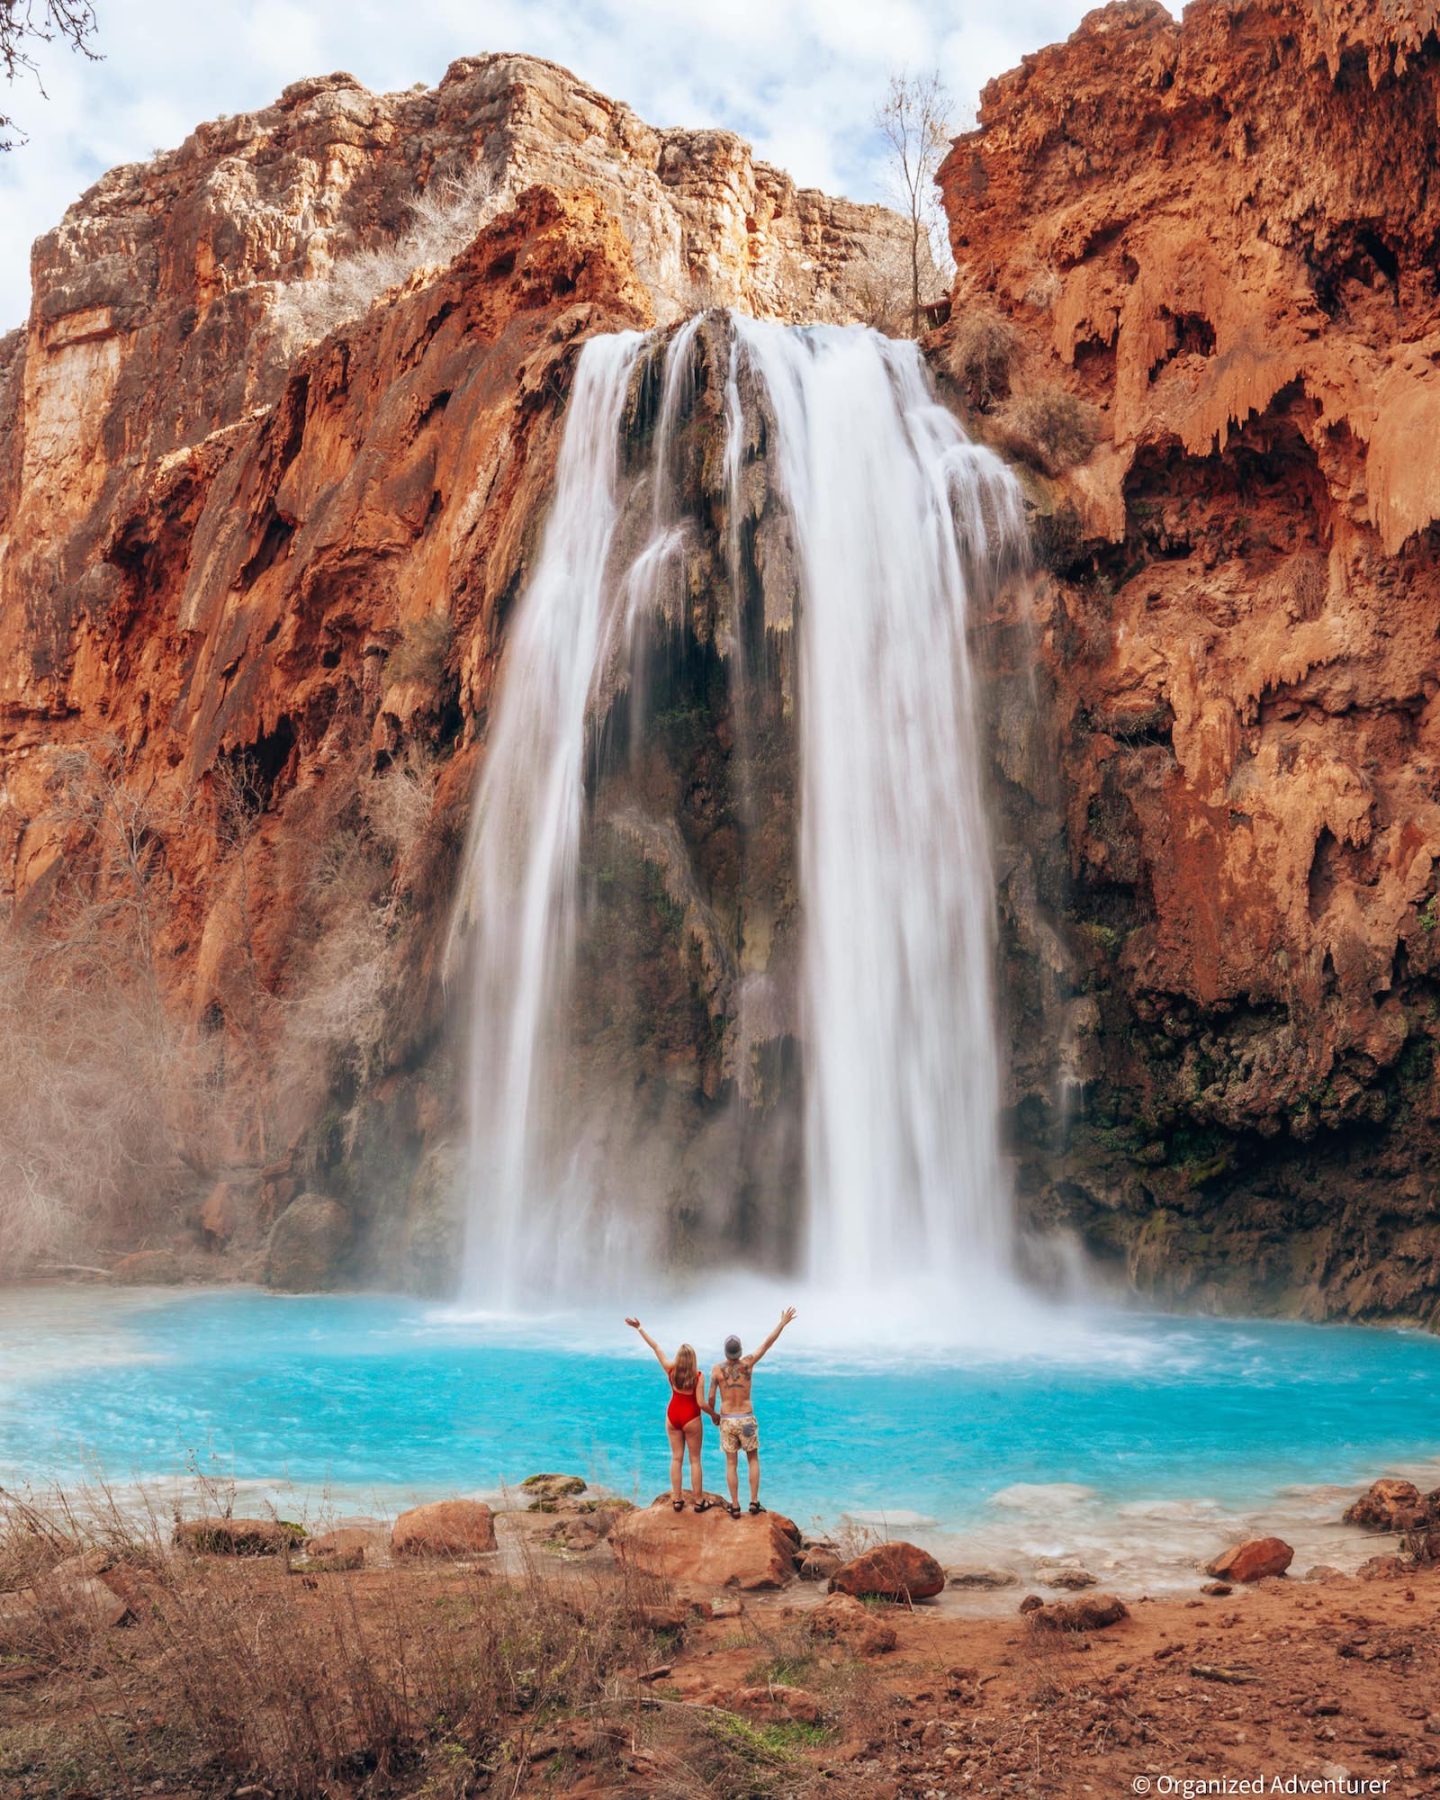 Tim and Sarah from Organized Adventurer at Havasuipai Falls - Grand Canyon, Arizona